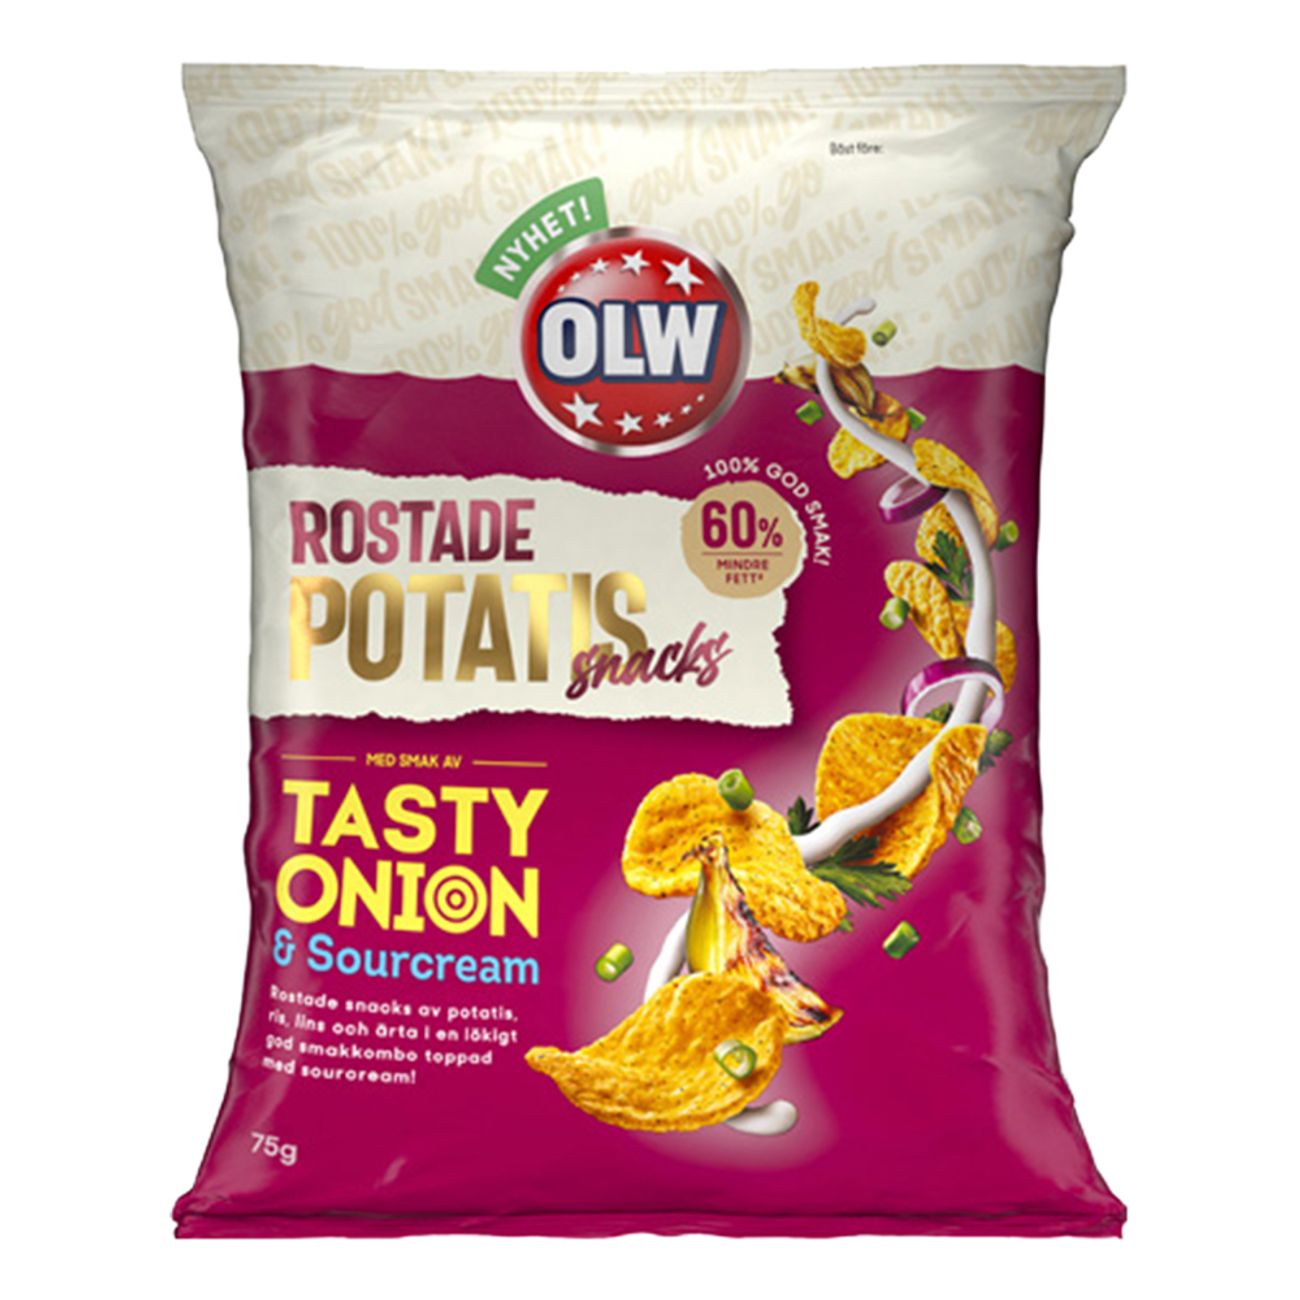 olw-rostade-potatissnacks-tasty-onion-92479-1